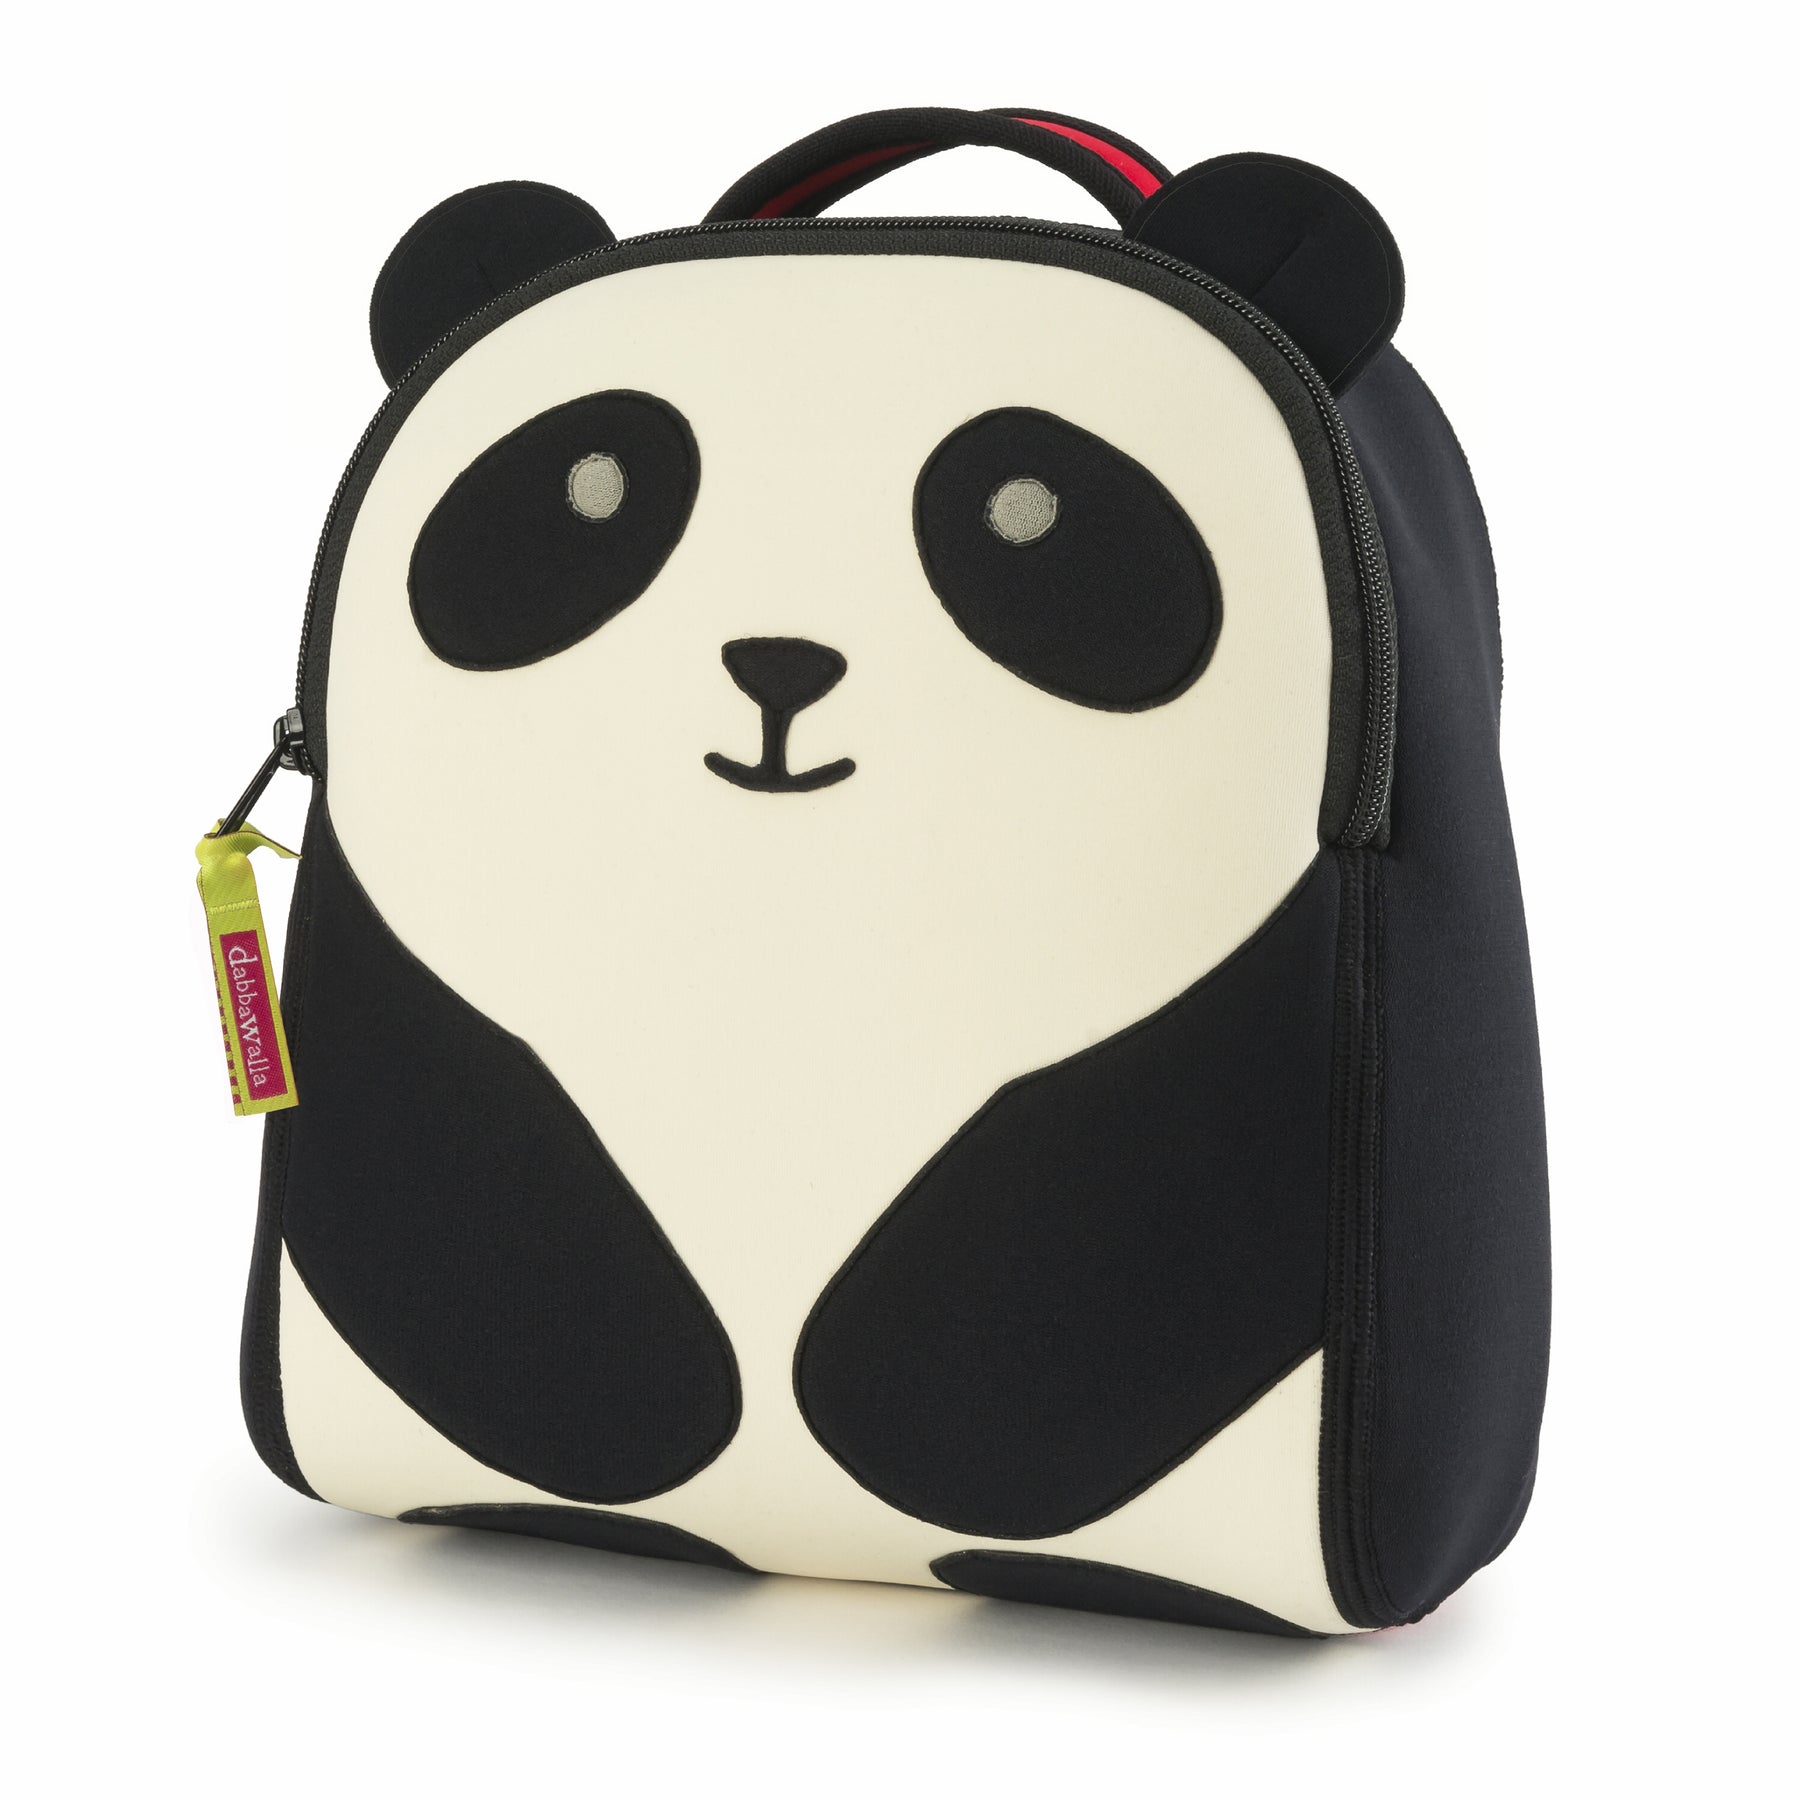 Cute Bunny Backpacks for Children School Bags for Girls Kids Backpack  Kindergarten Baby Bag with Ears